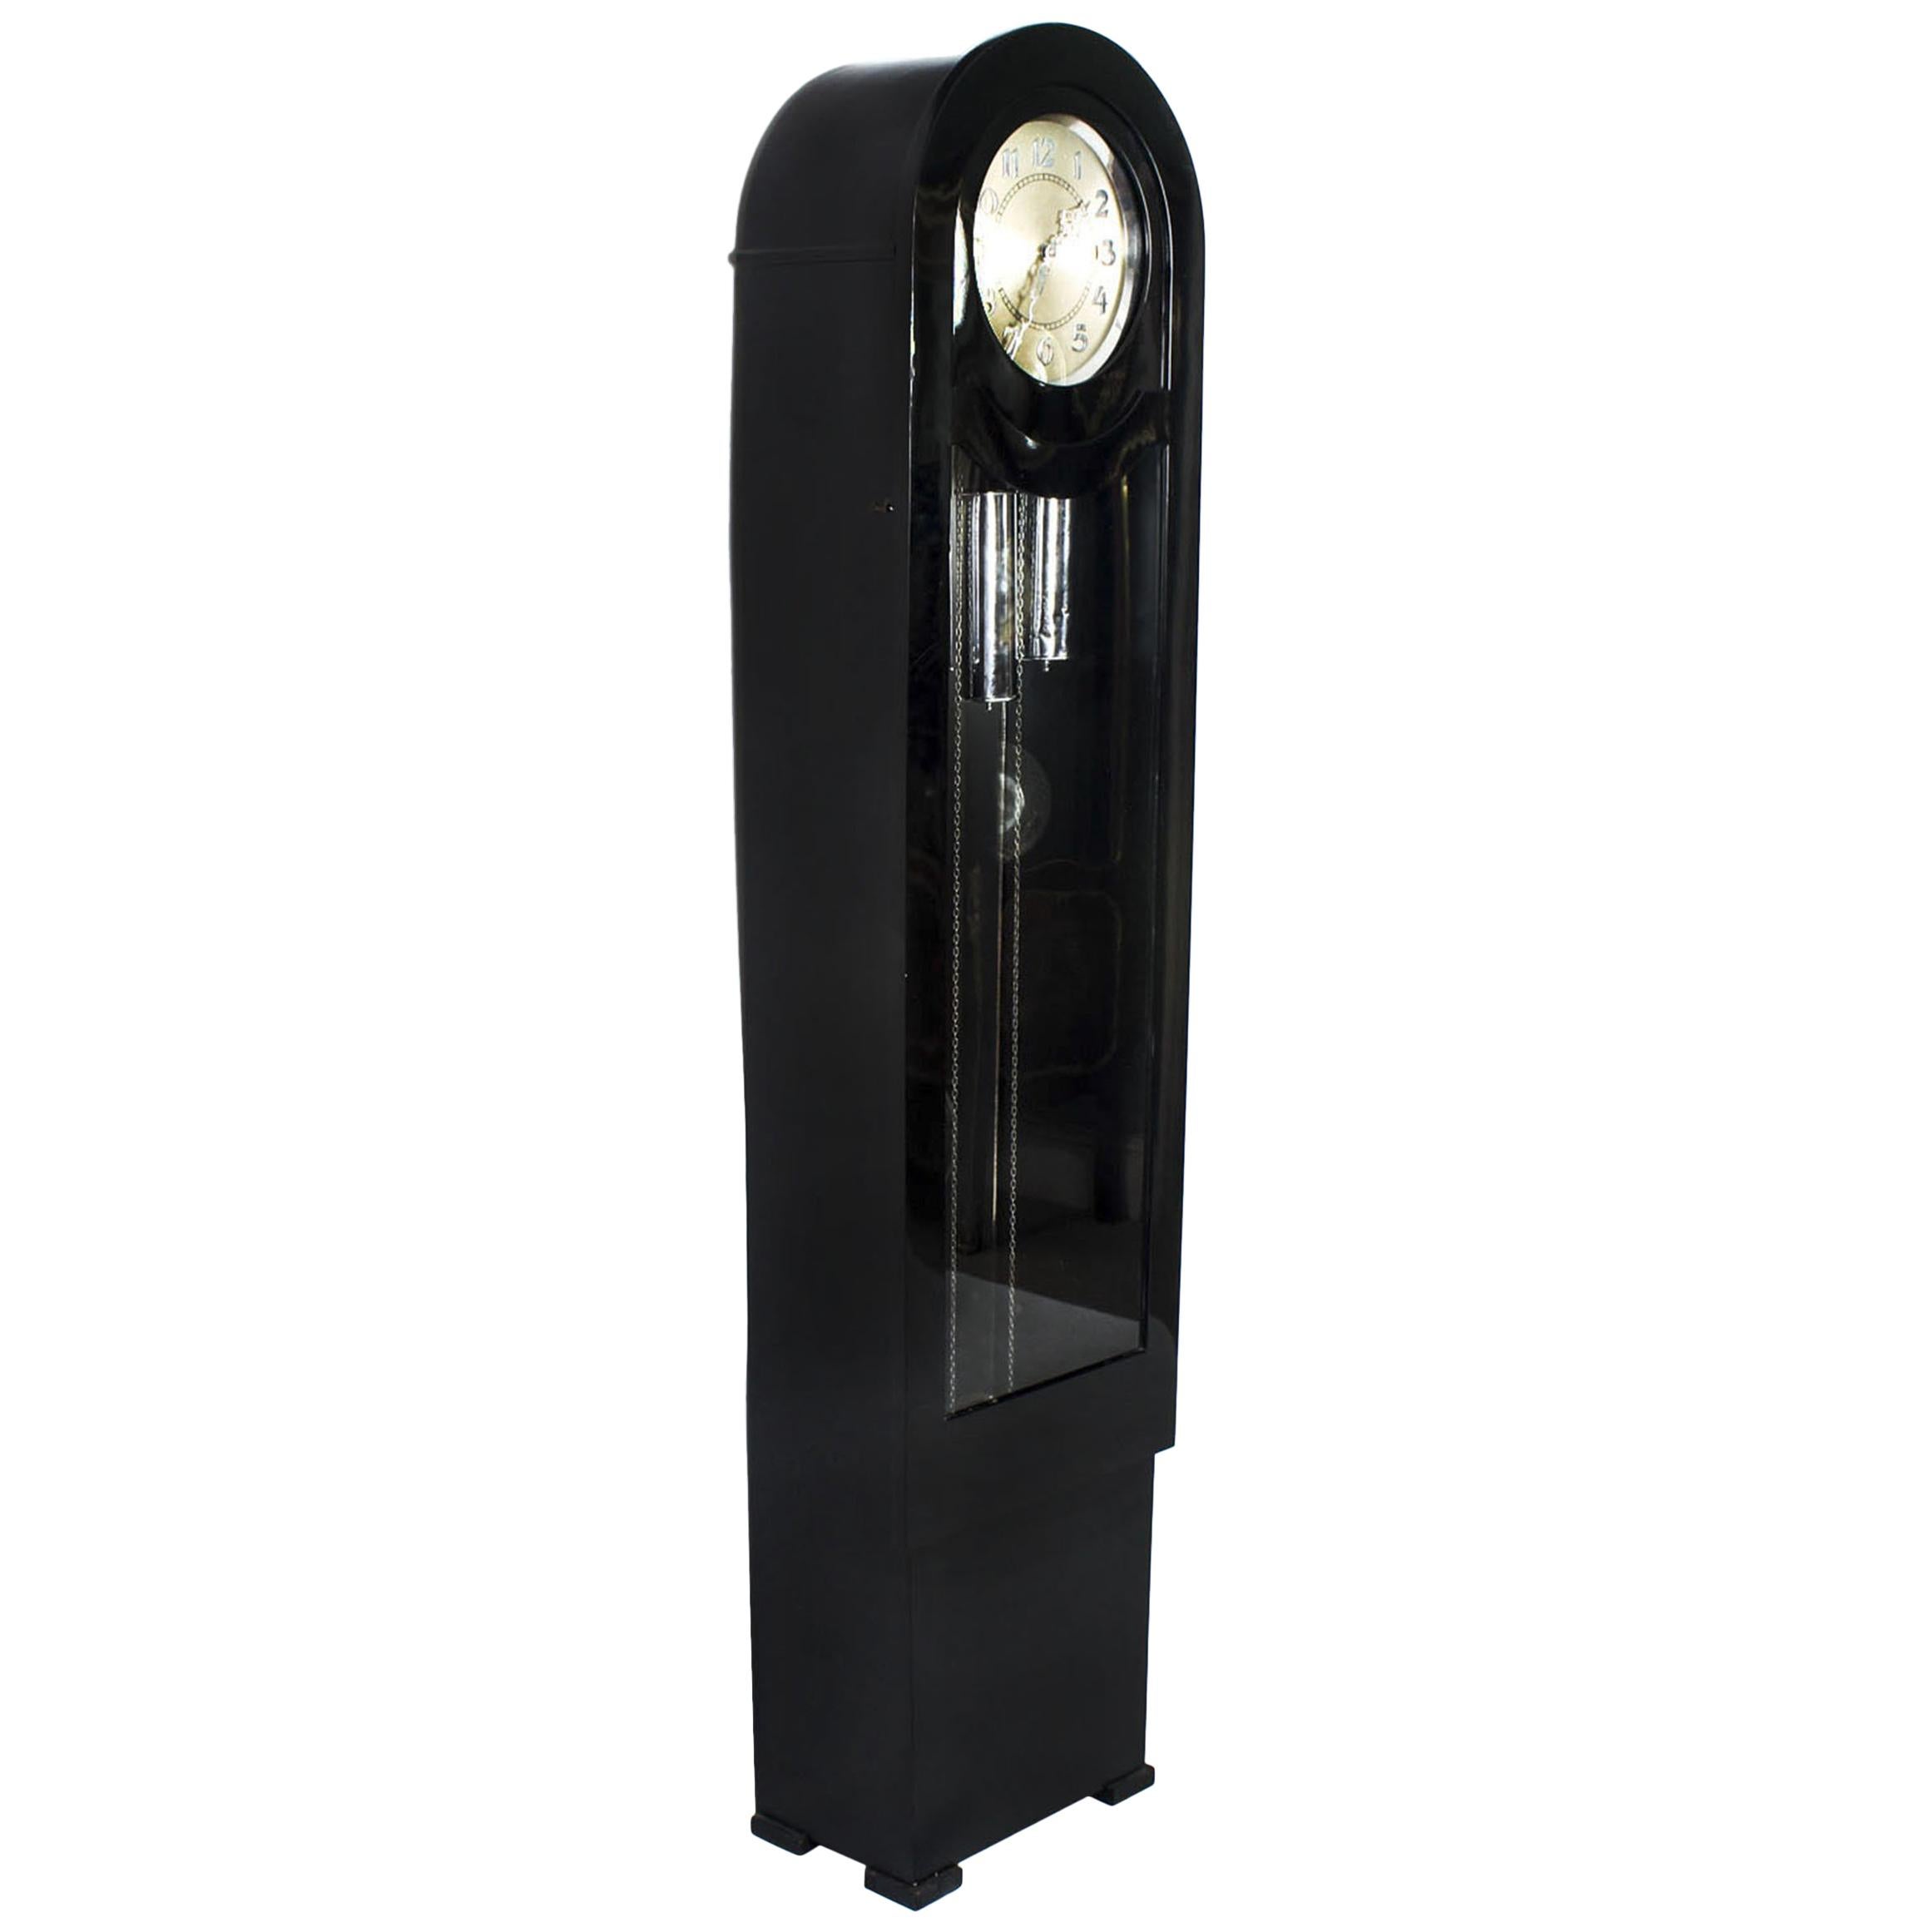 1930s Art Deco Black Lacquer Chiming Longcase Clock